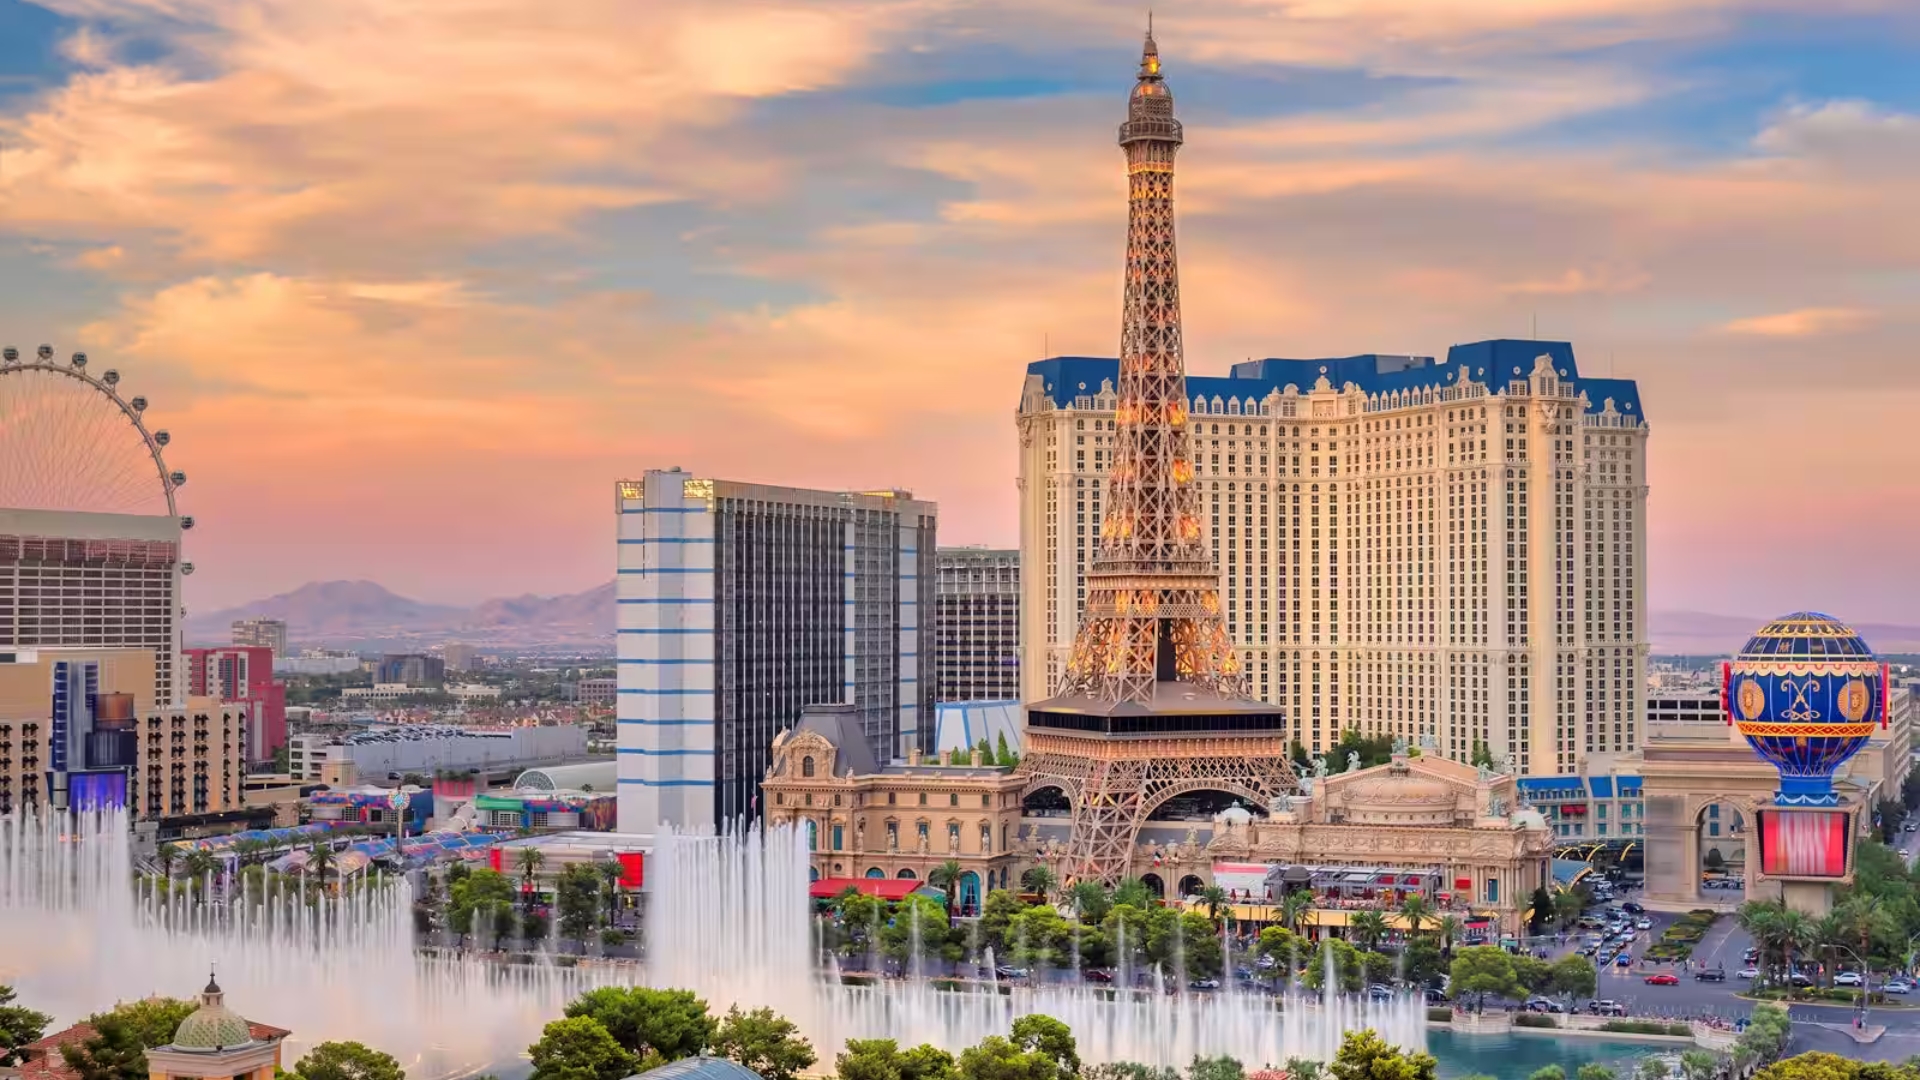 [JADE] The Eiffel Tower Experience at Paris Las Vegas